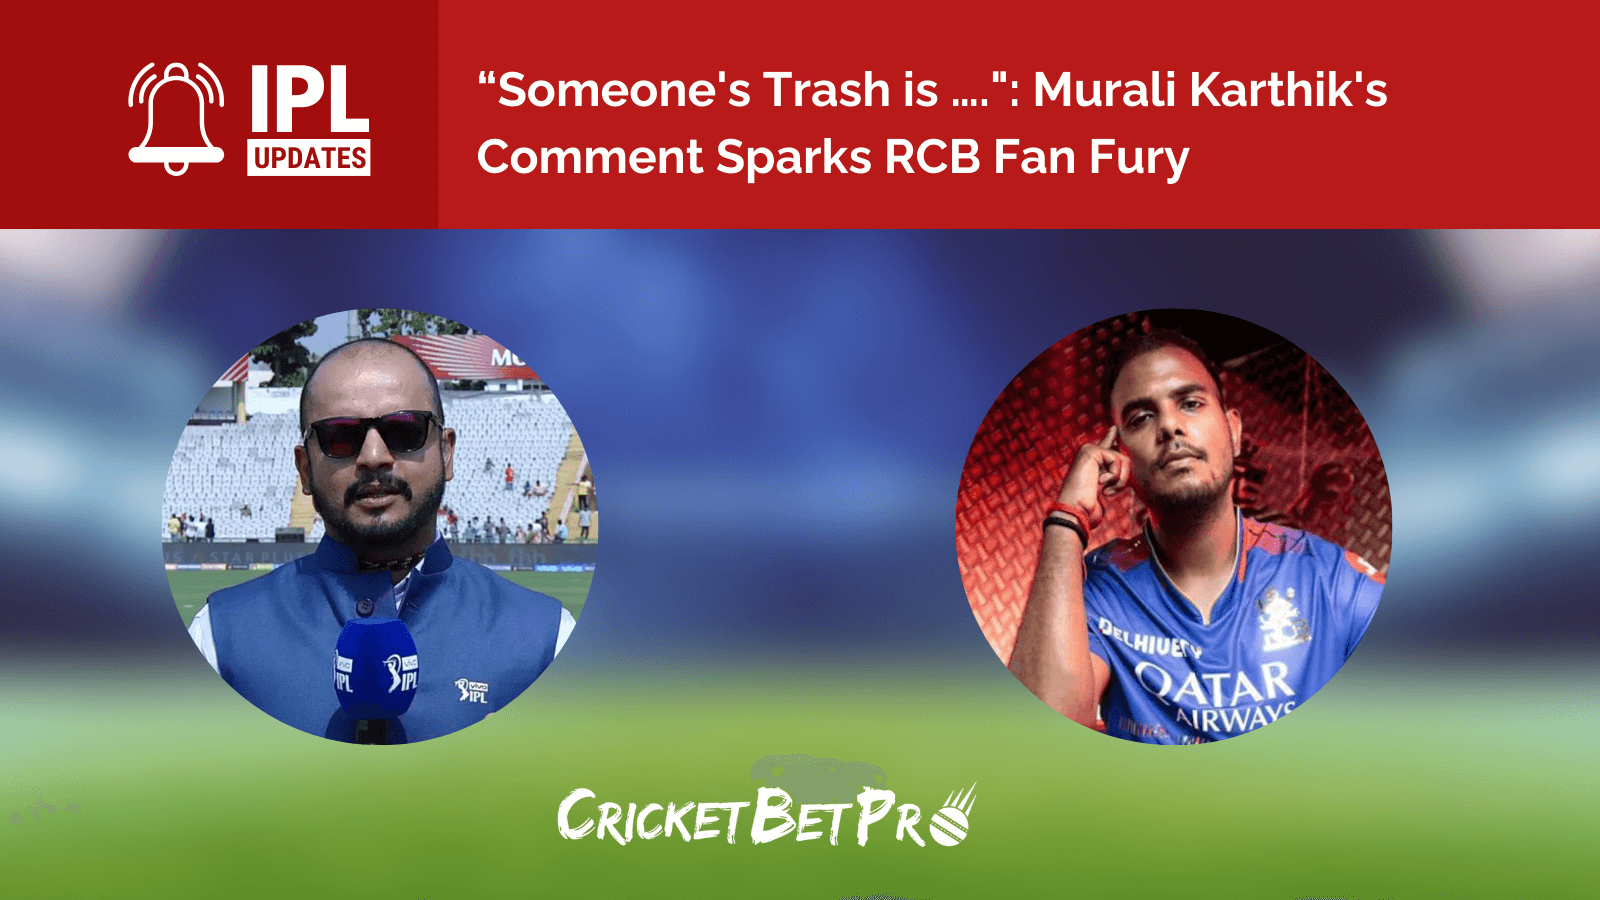 “Someone's Trash is …. Murali Karthik's Comment Sparks RCB Fan Fury